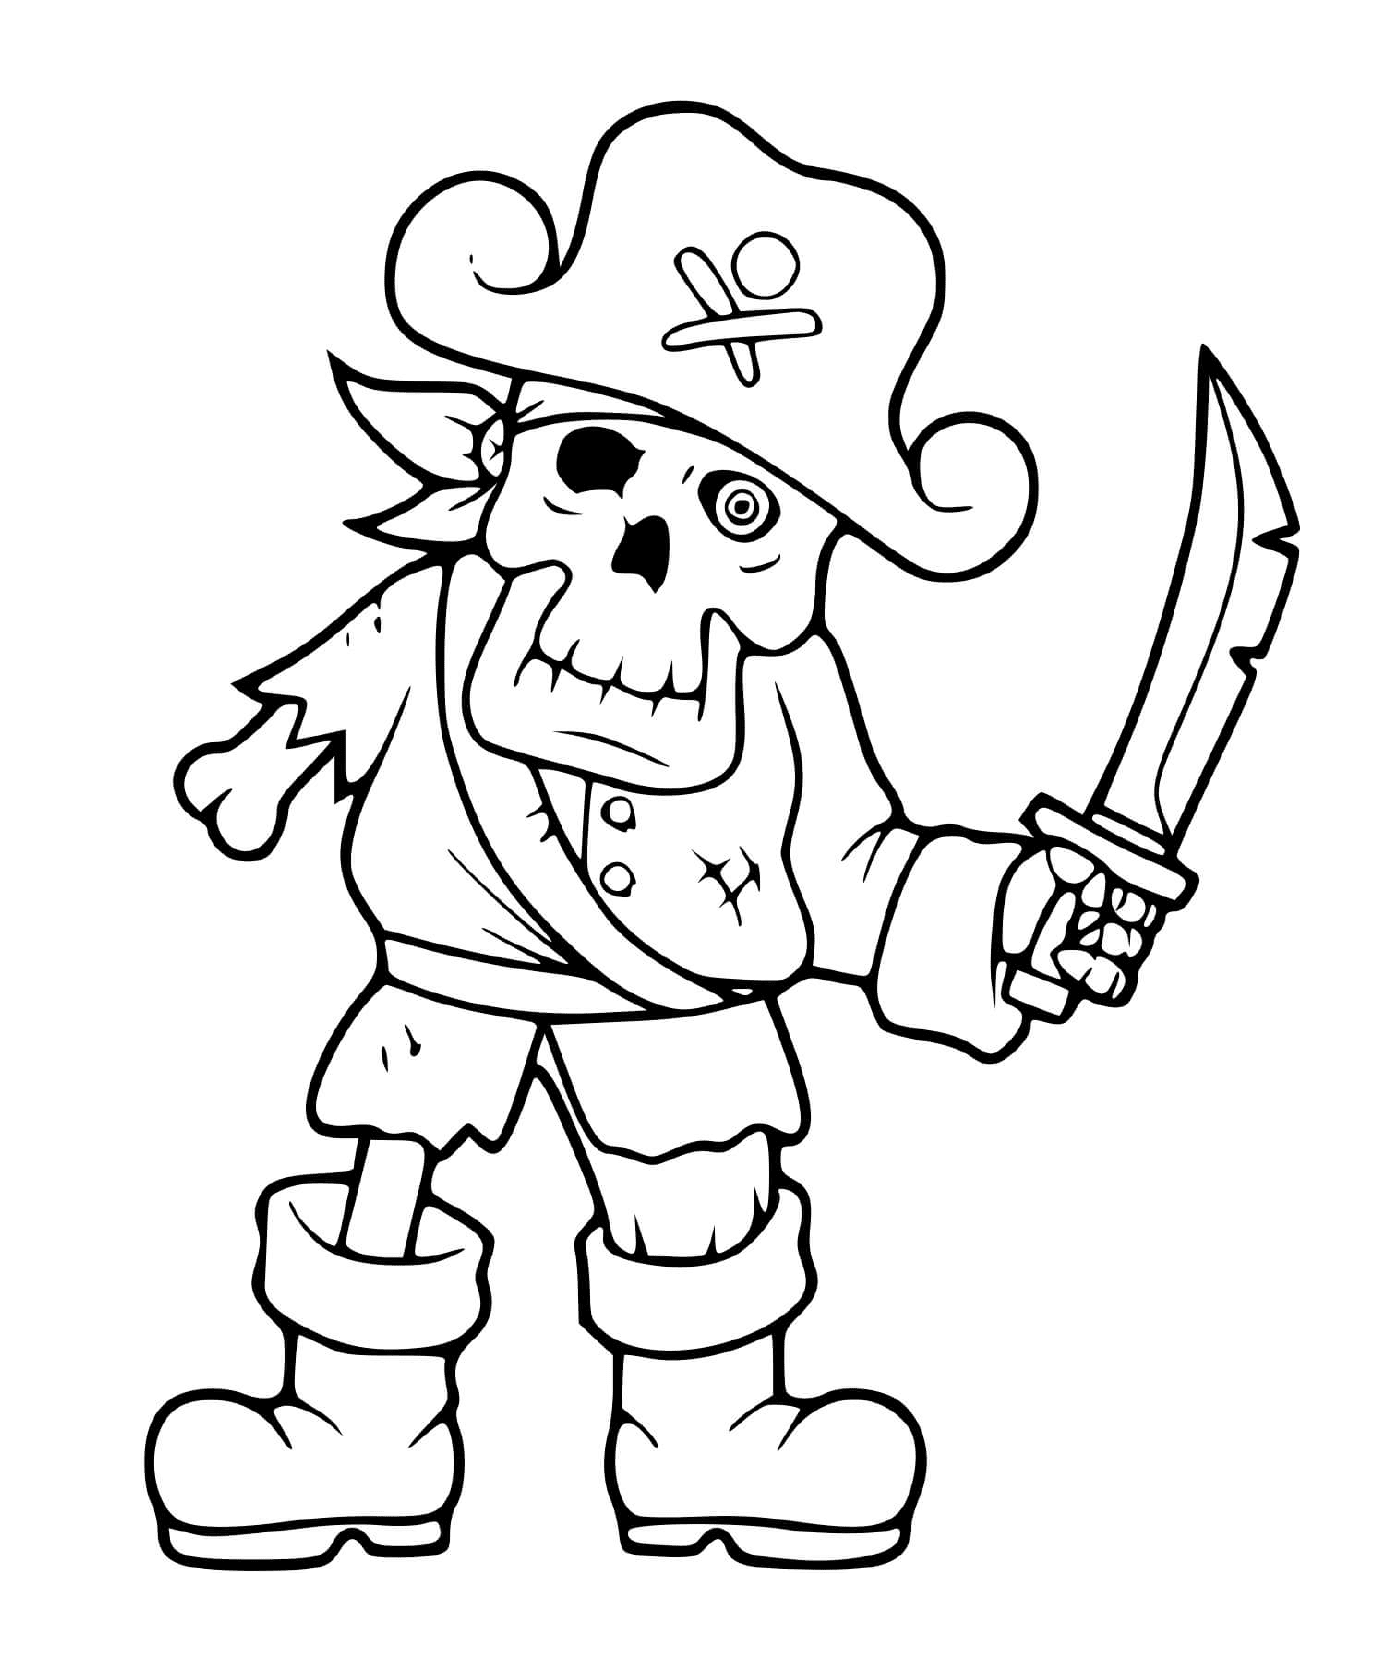  Scary pirate skeleton 